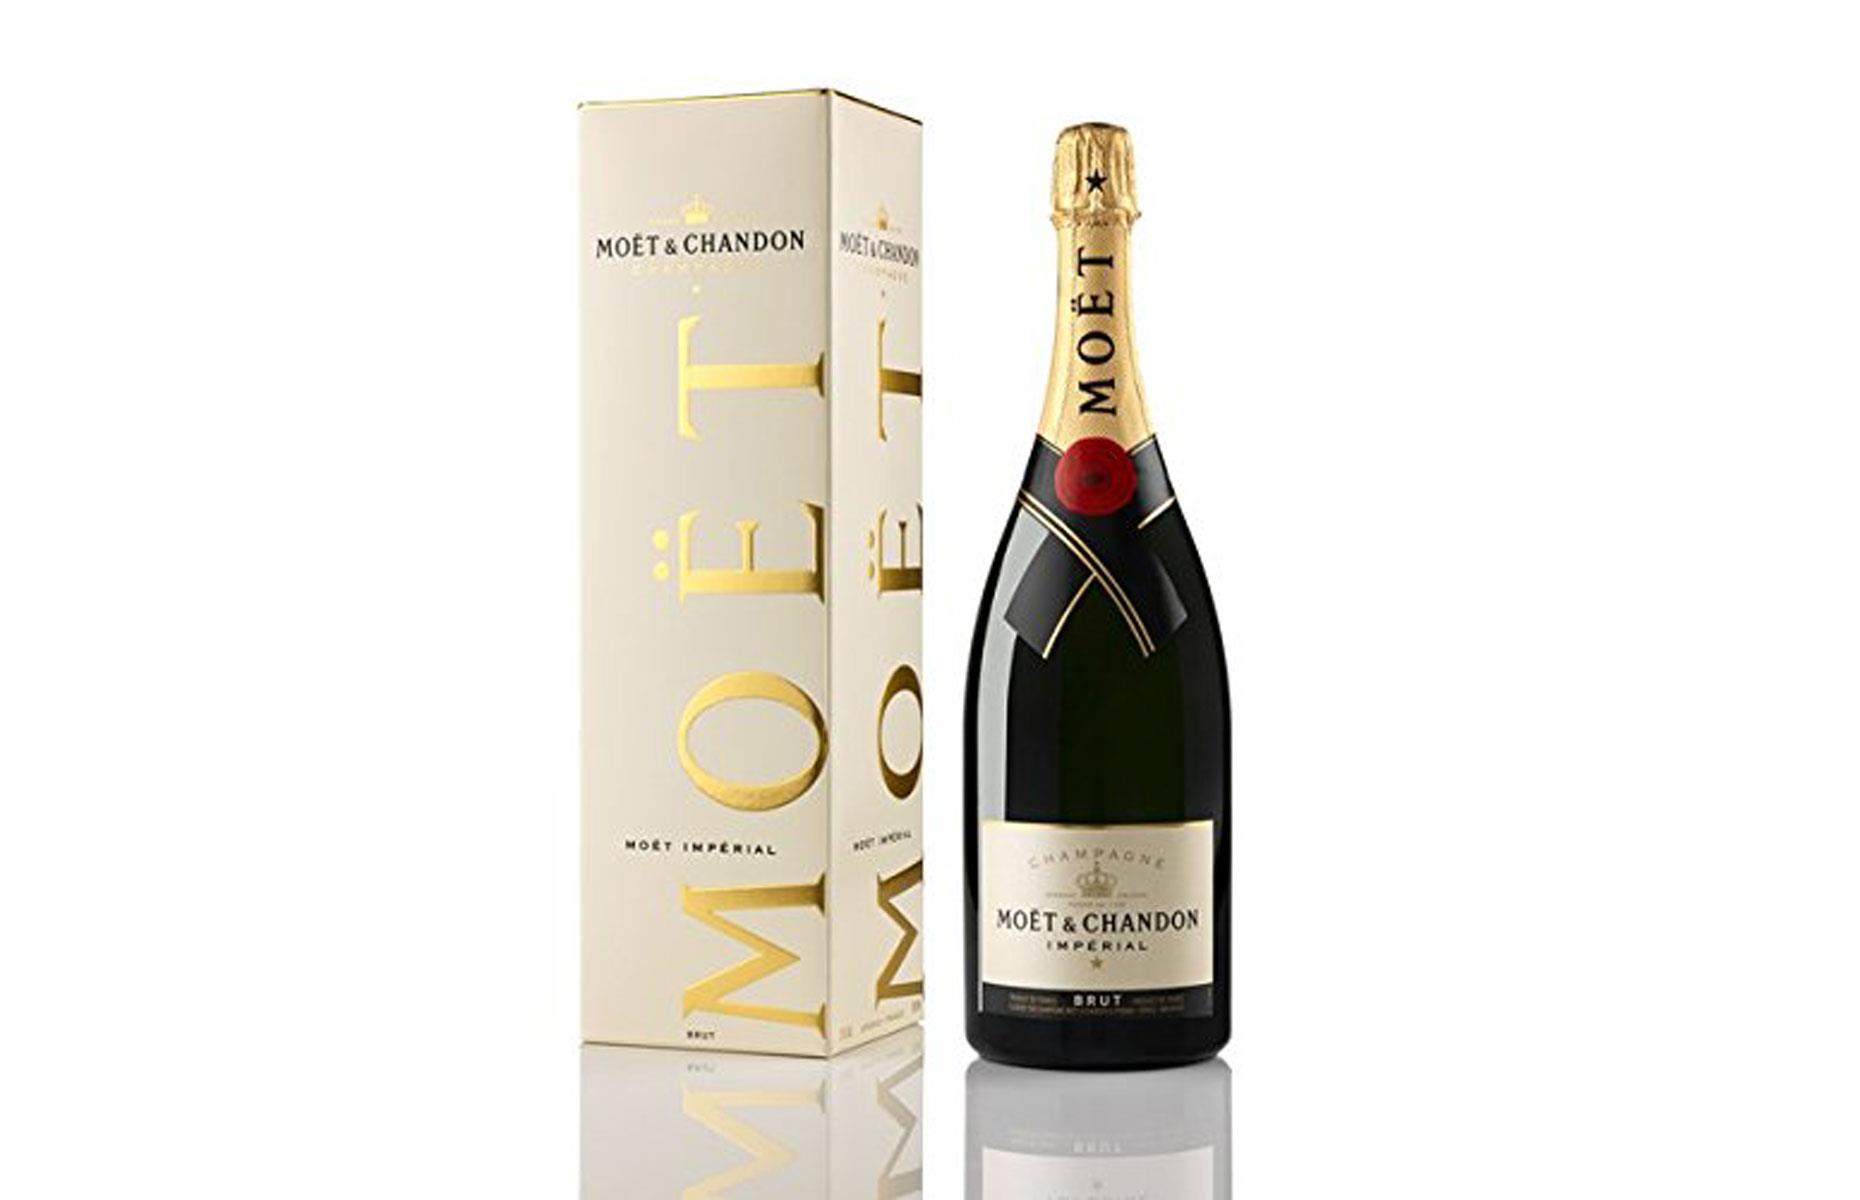 Moët & Chandon Moët Imperial 1996 champagne: $300 (£236)